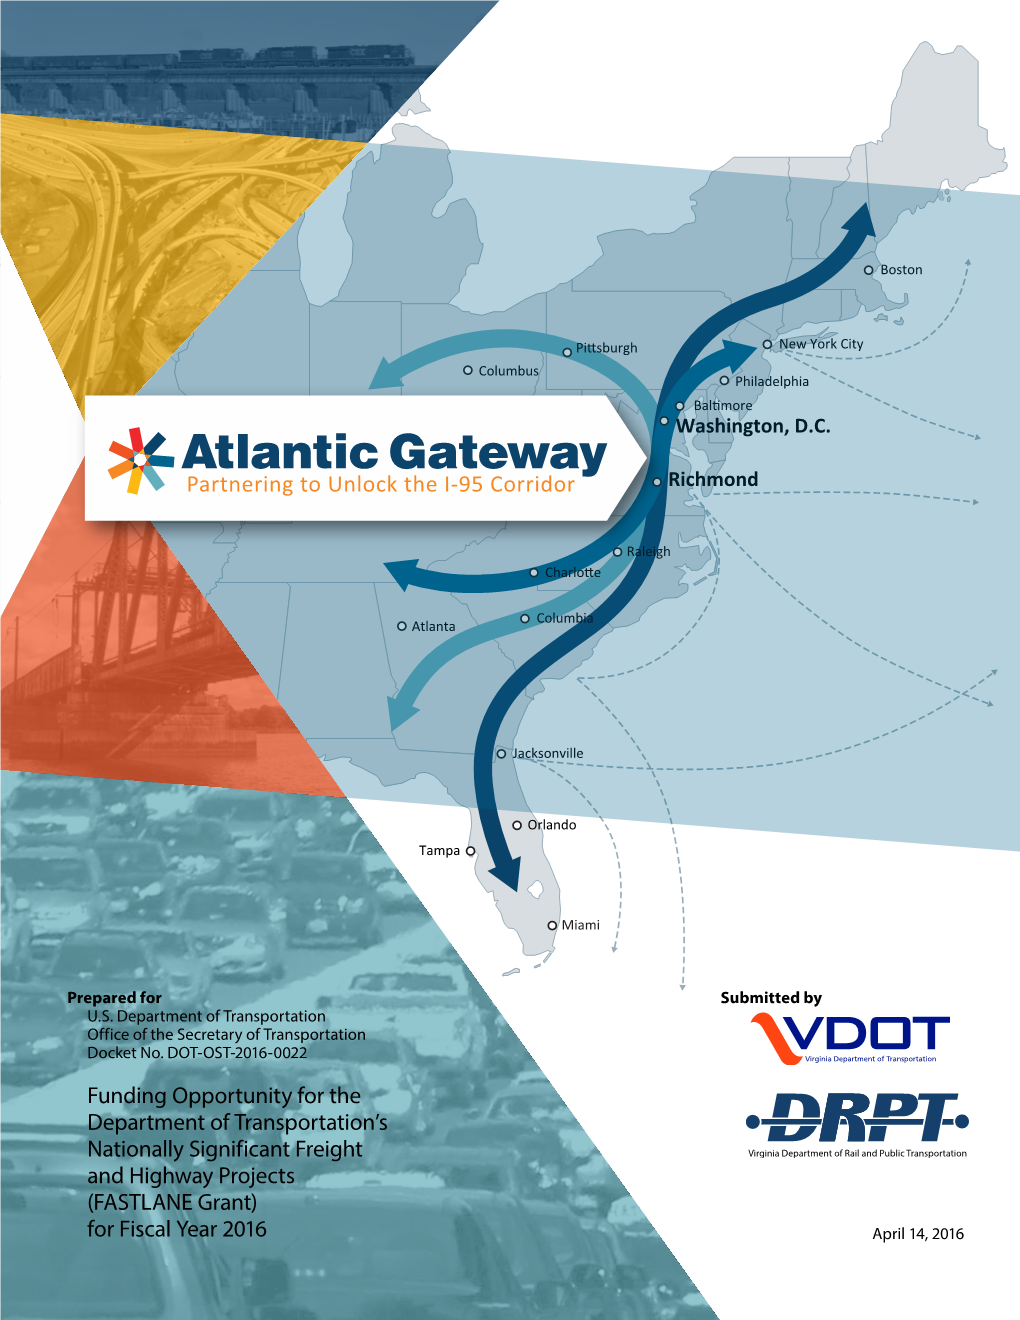 Atlantic Gateway FASTLANE Grant Application from VDOT